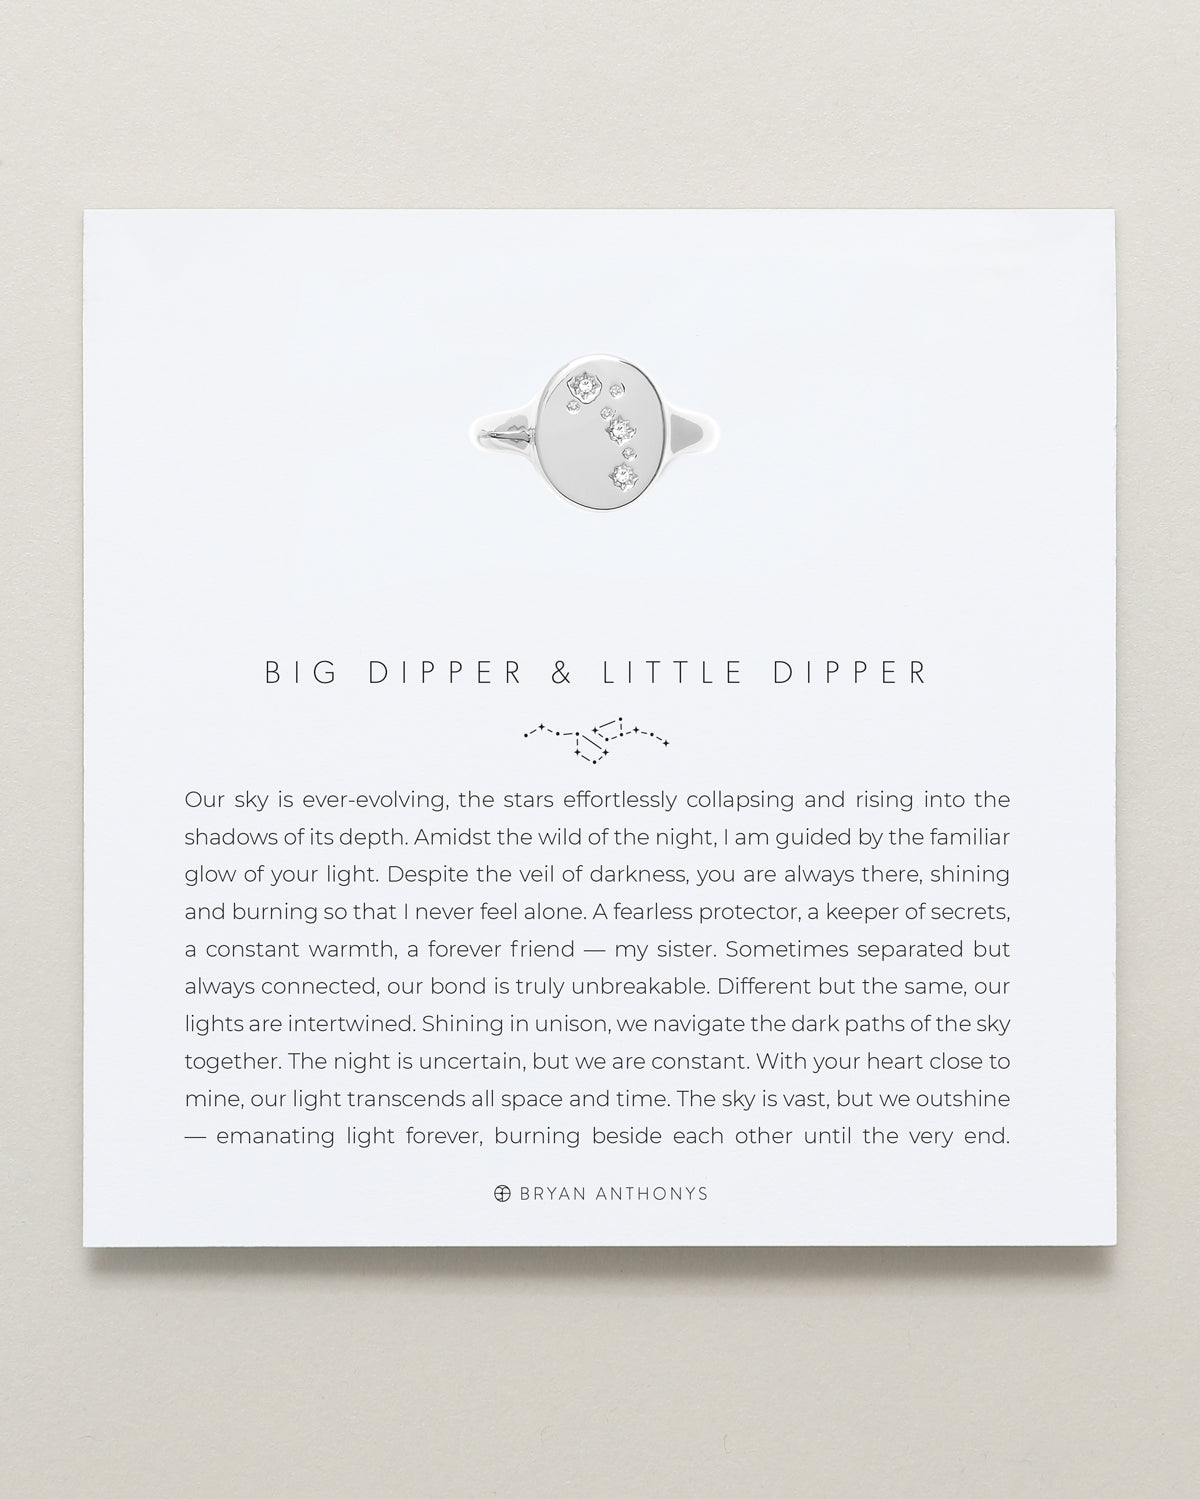 Little Dipper Signet Ring carded